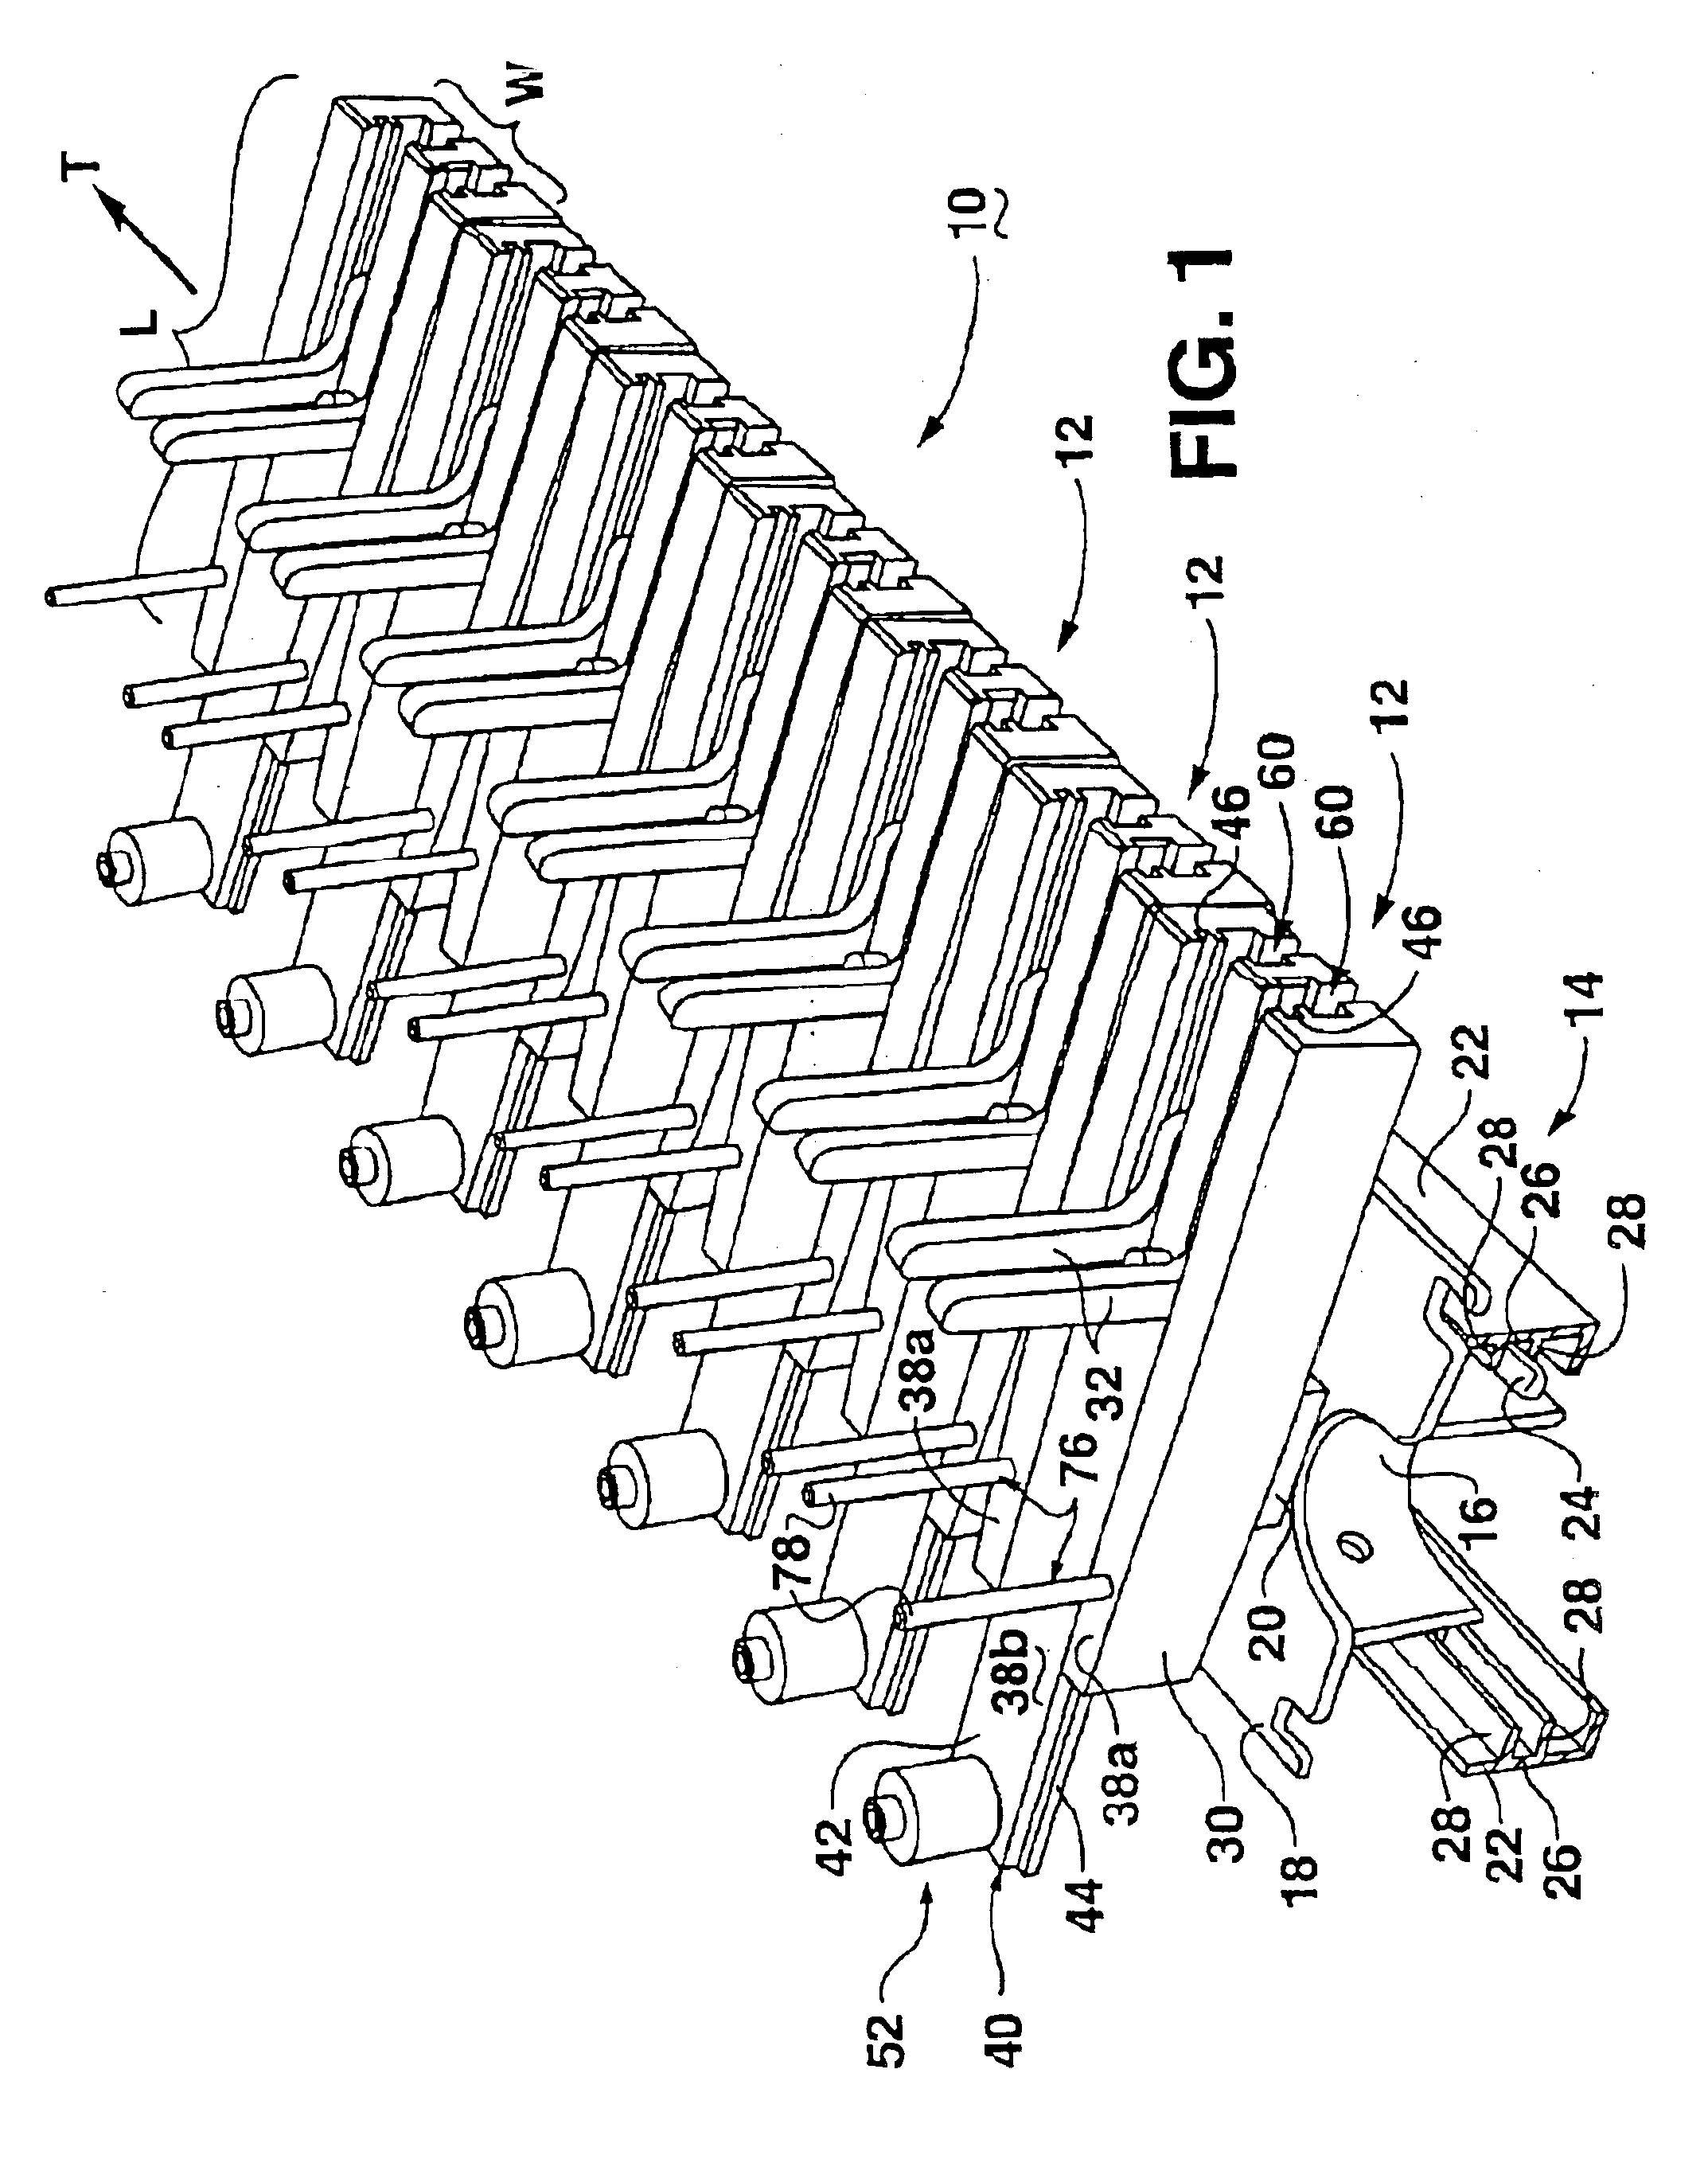 Conveyor with gear mechanism gripper and related conveyor link